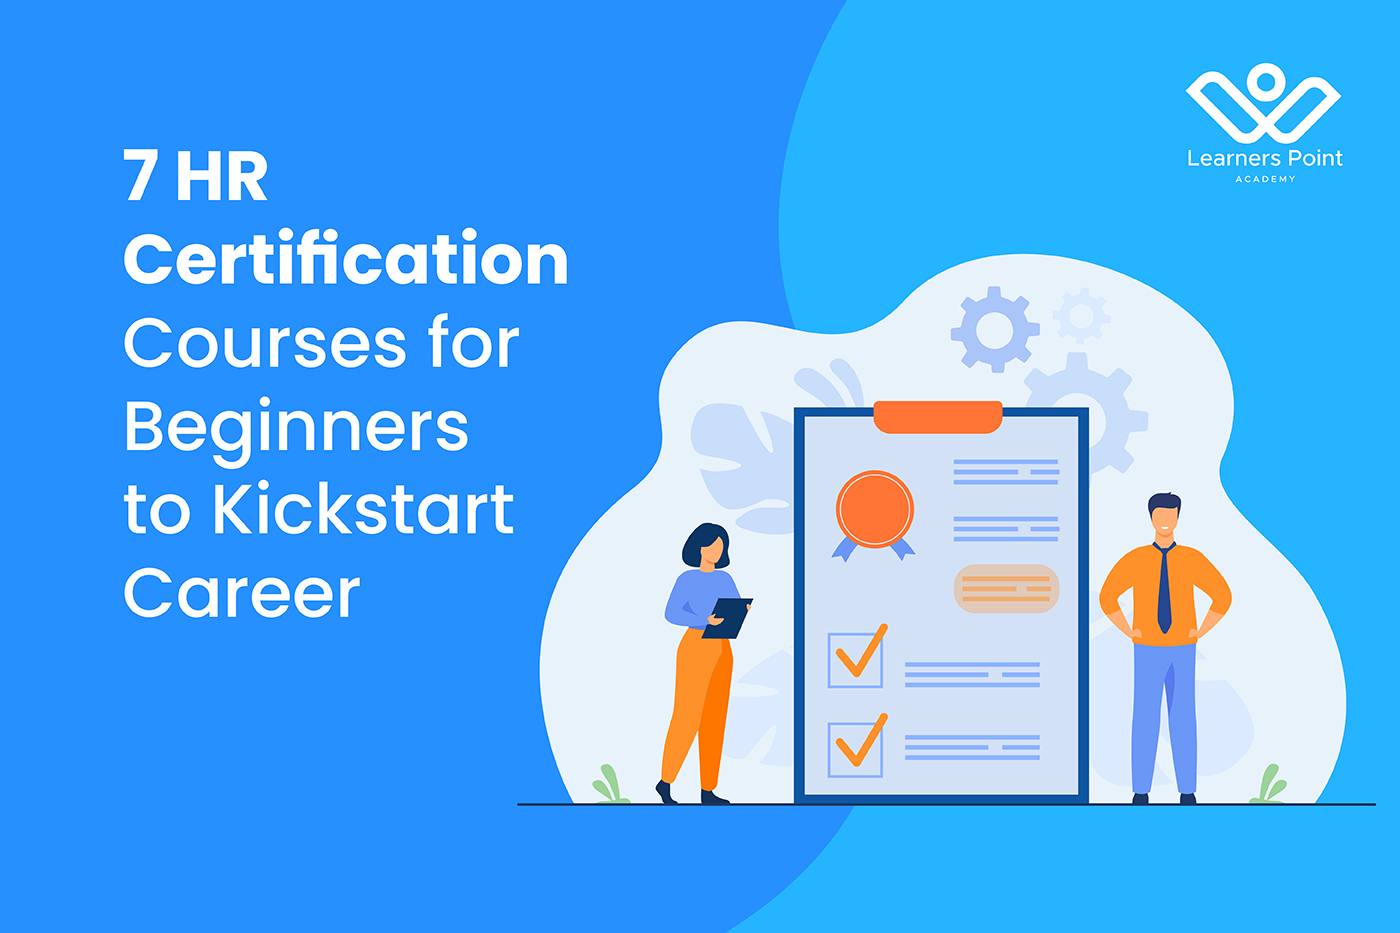 7 HR Certification Courses for Beginners to Kickstart Career